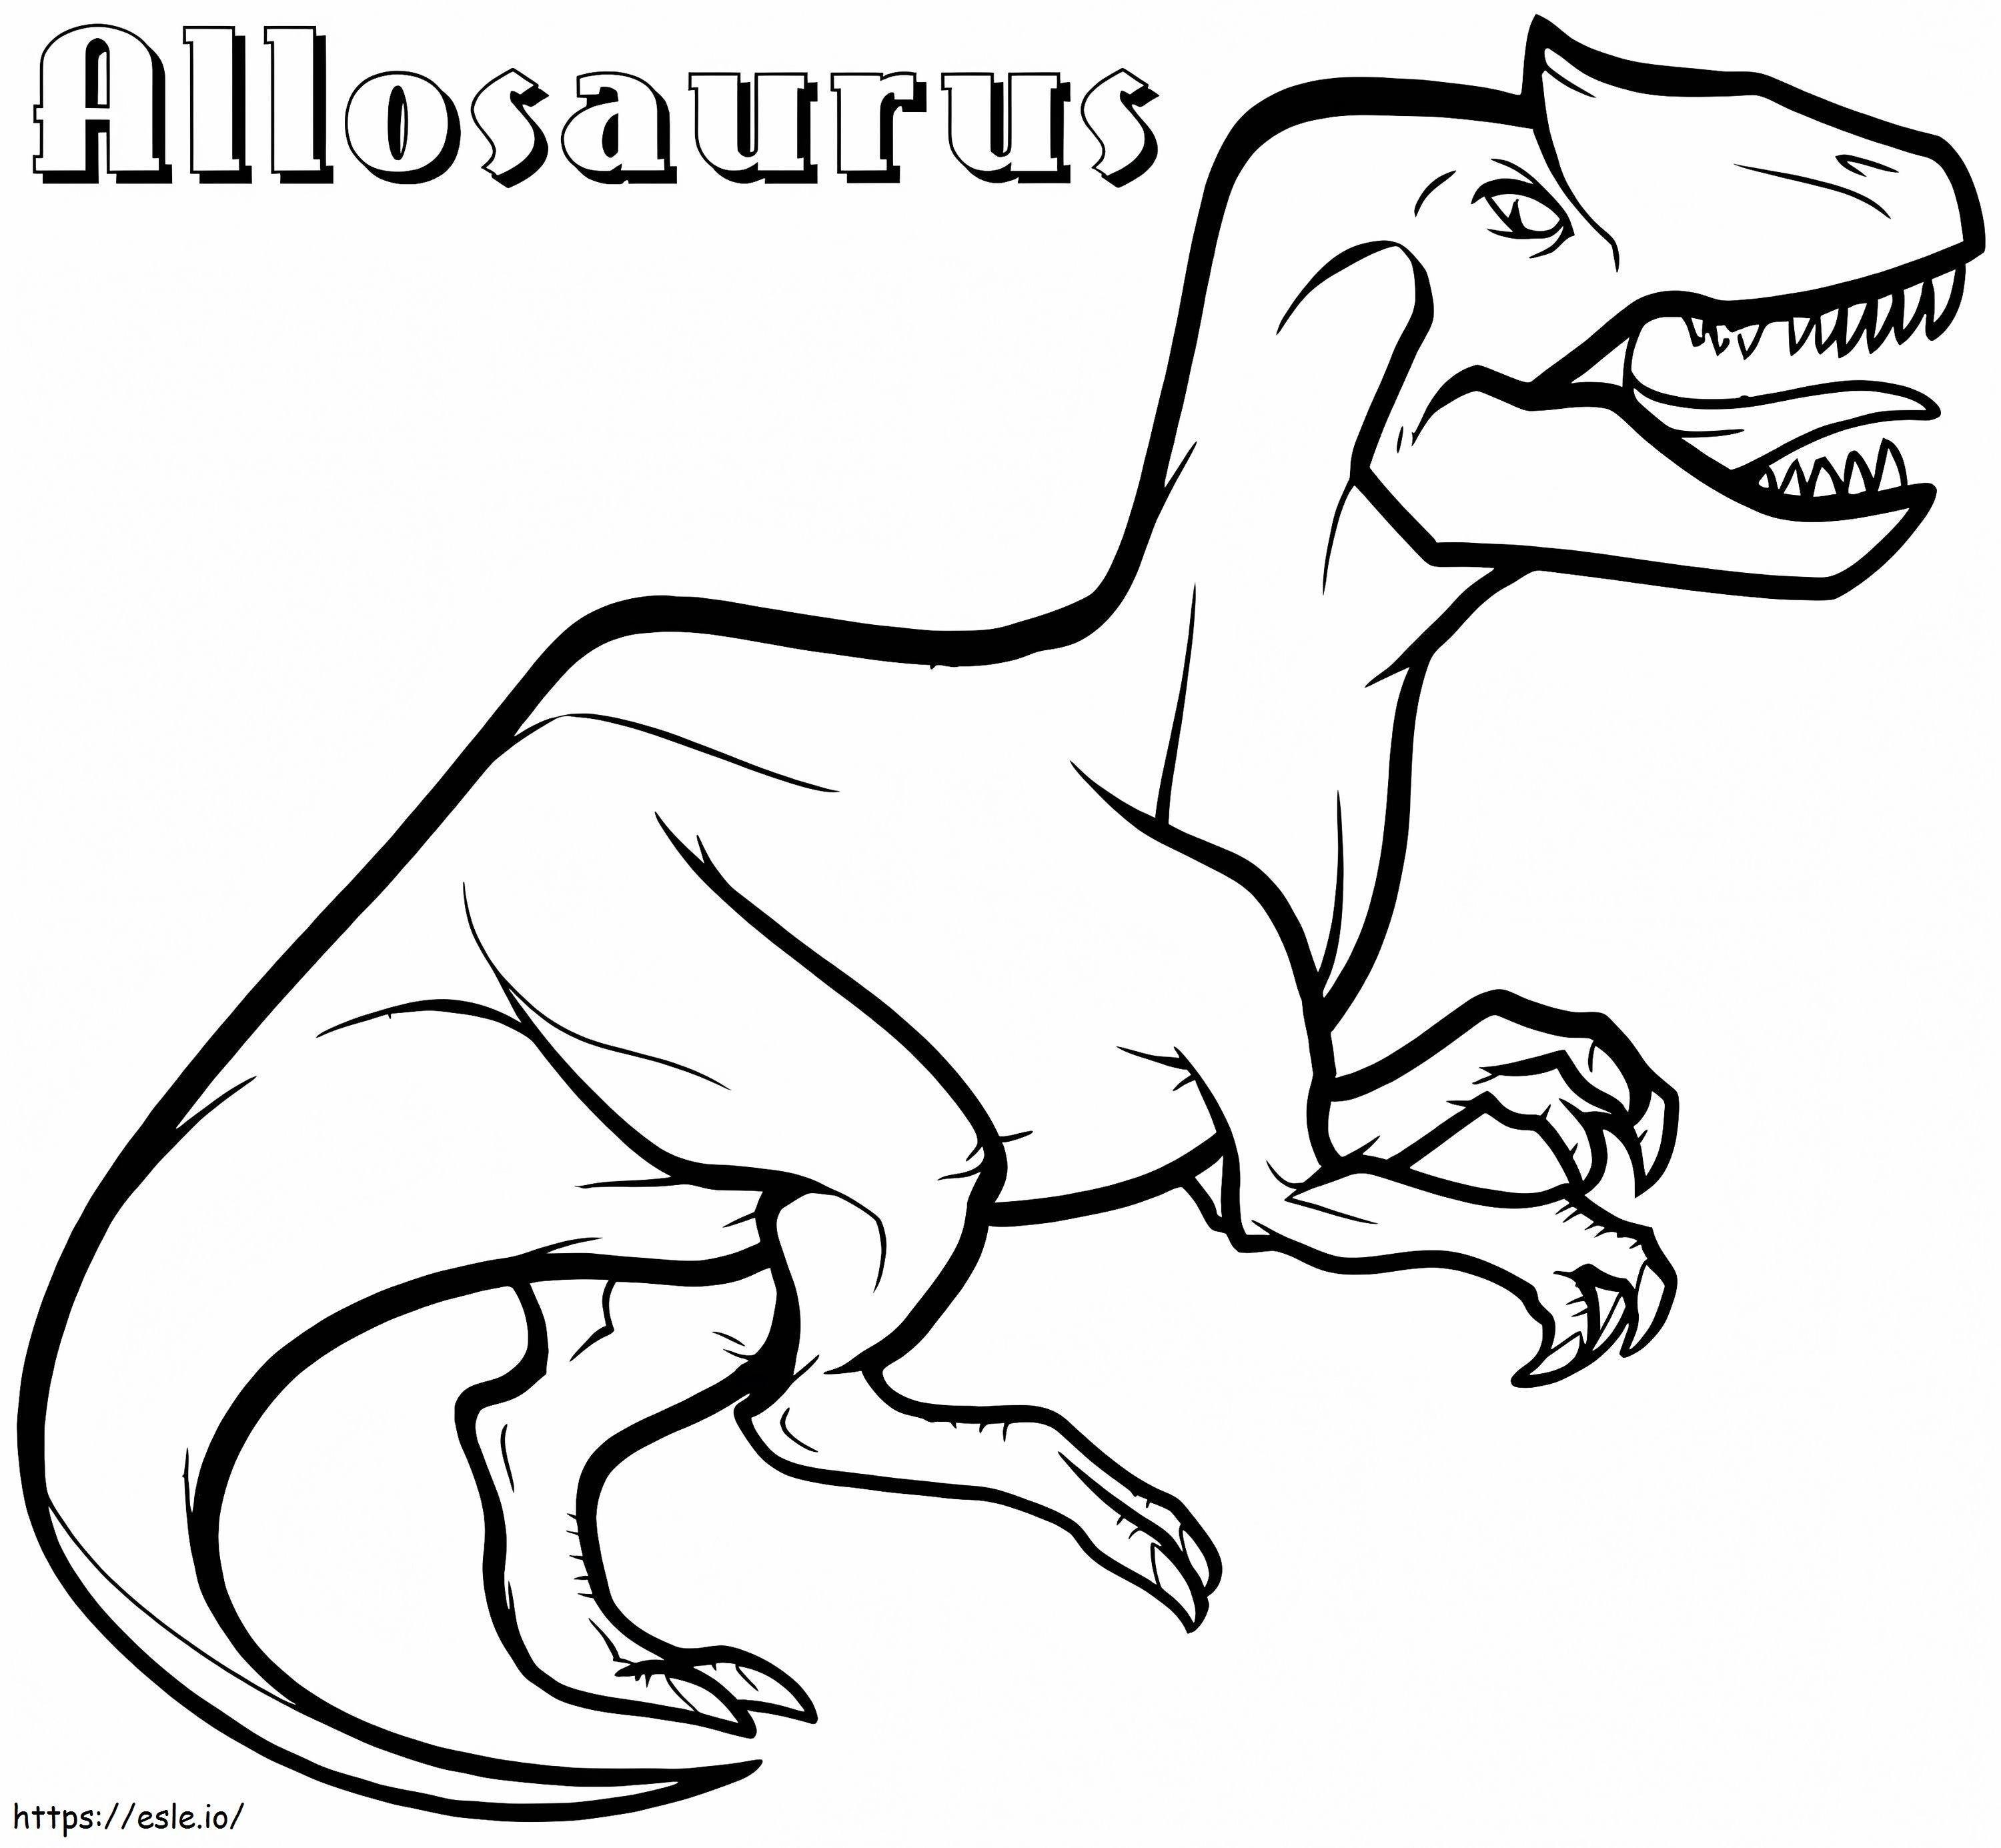 Allosaurus 2 kleurplaat kleurplaat